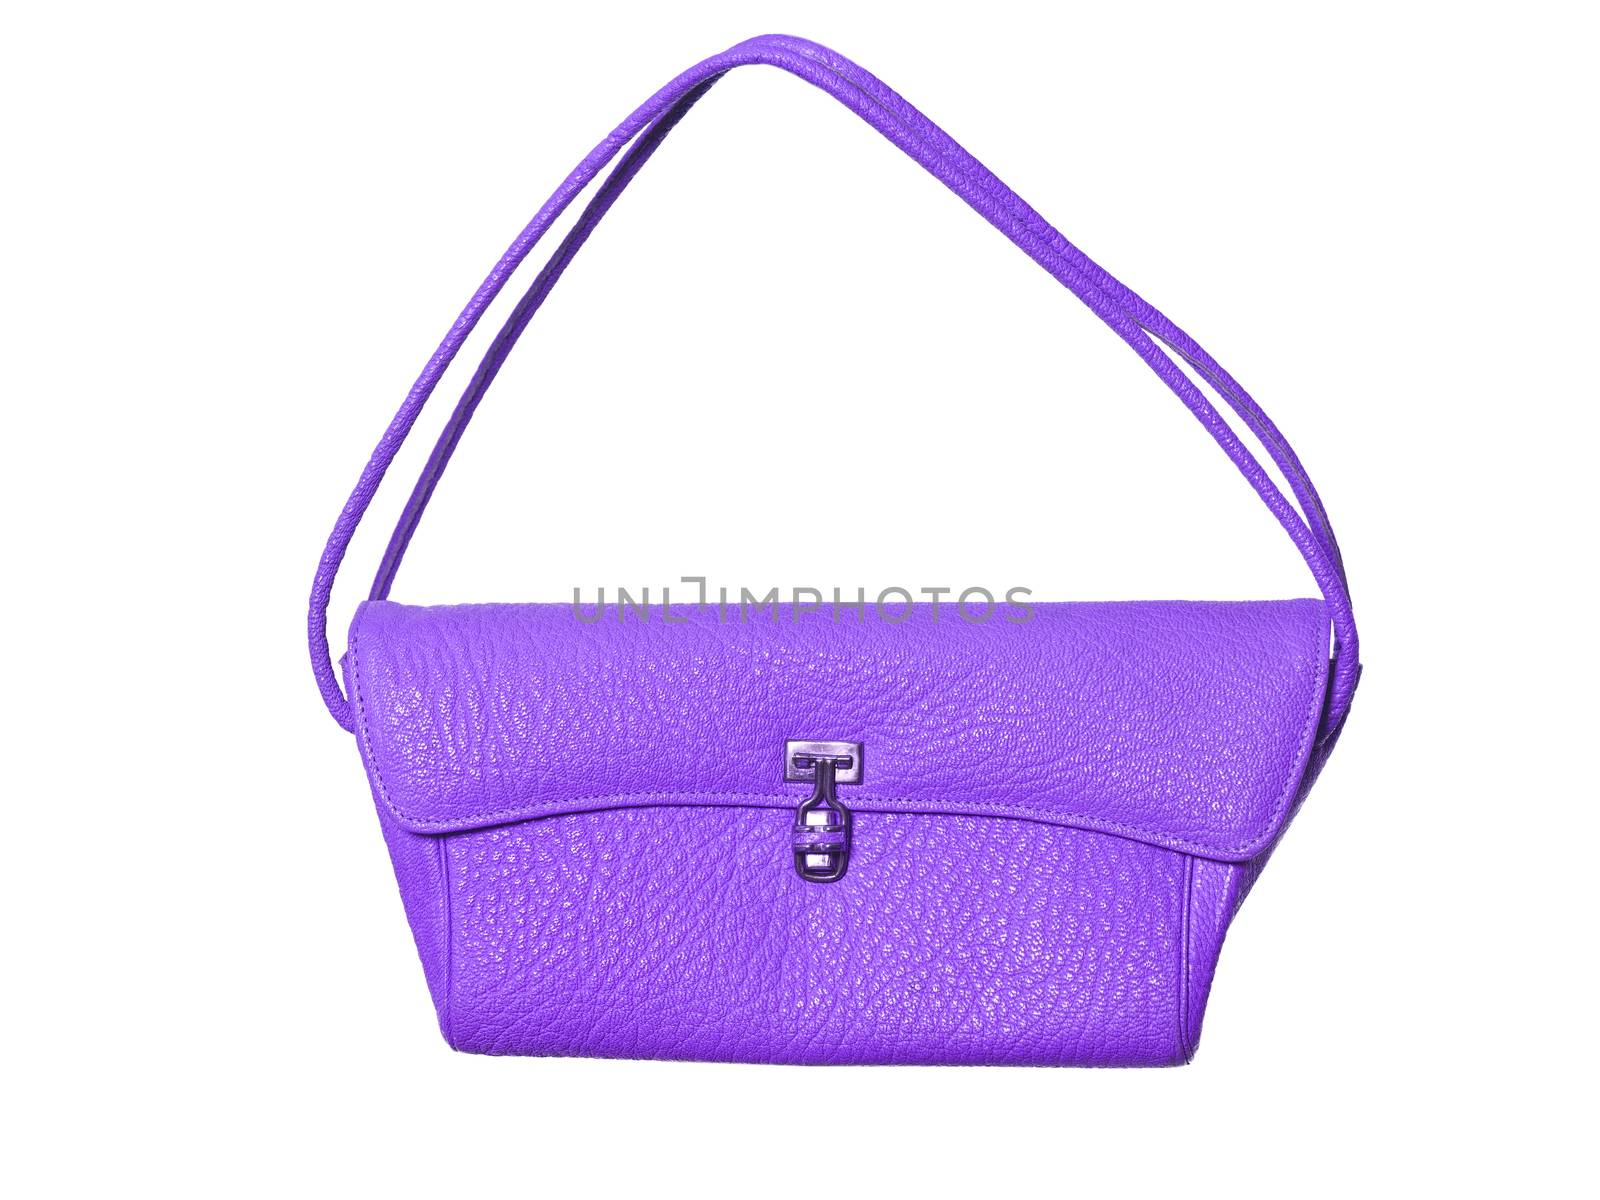 Purple purse isolated on white background